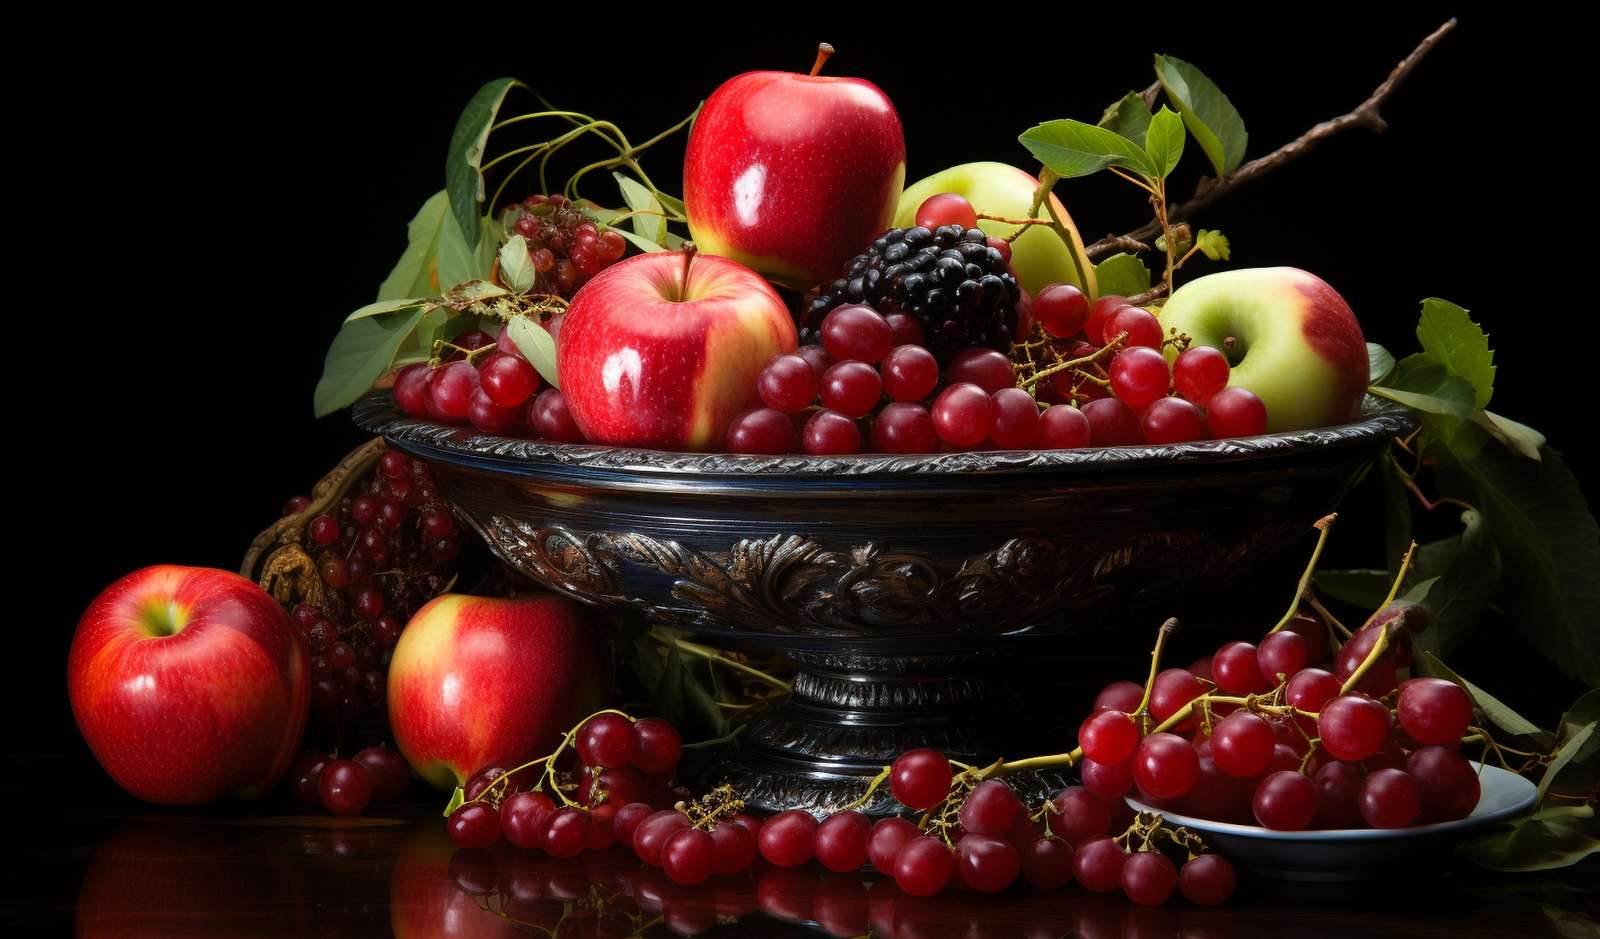 tontura de frutas sentiram a mistura de frutas no prato puzzle online